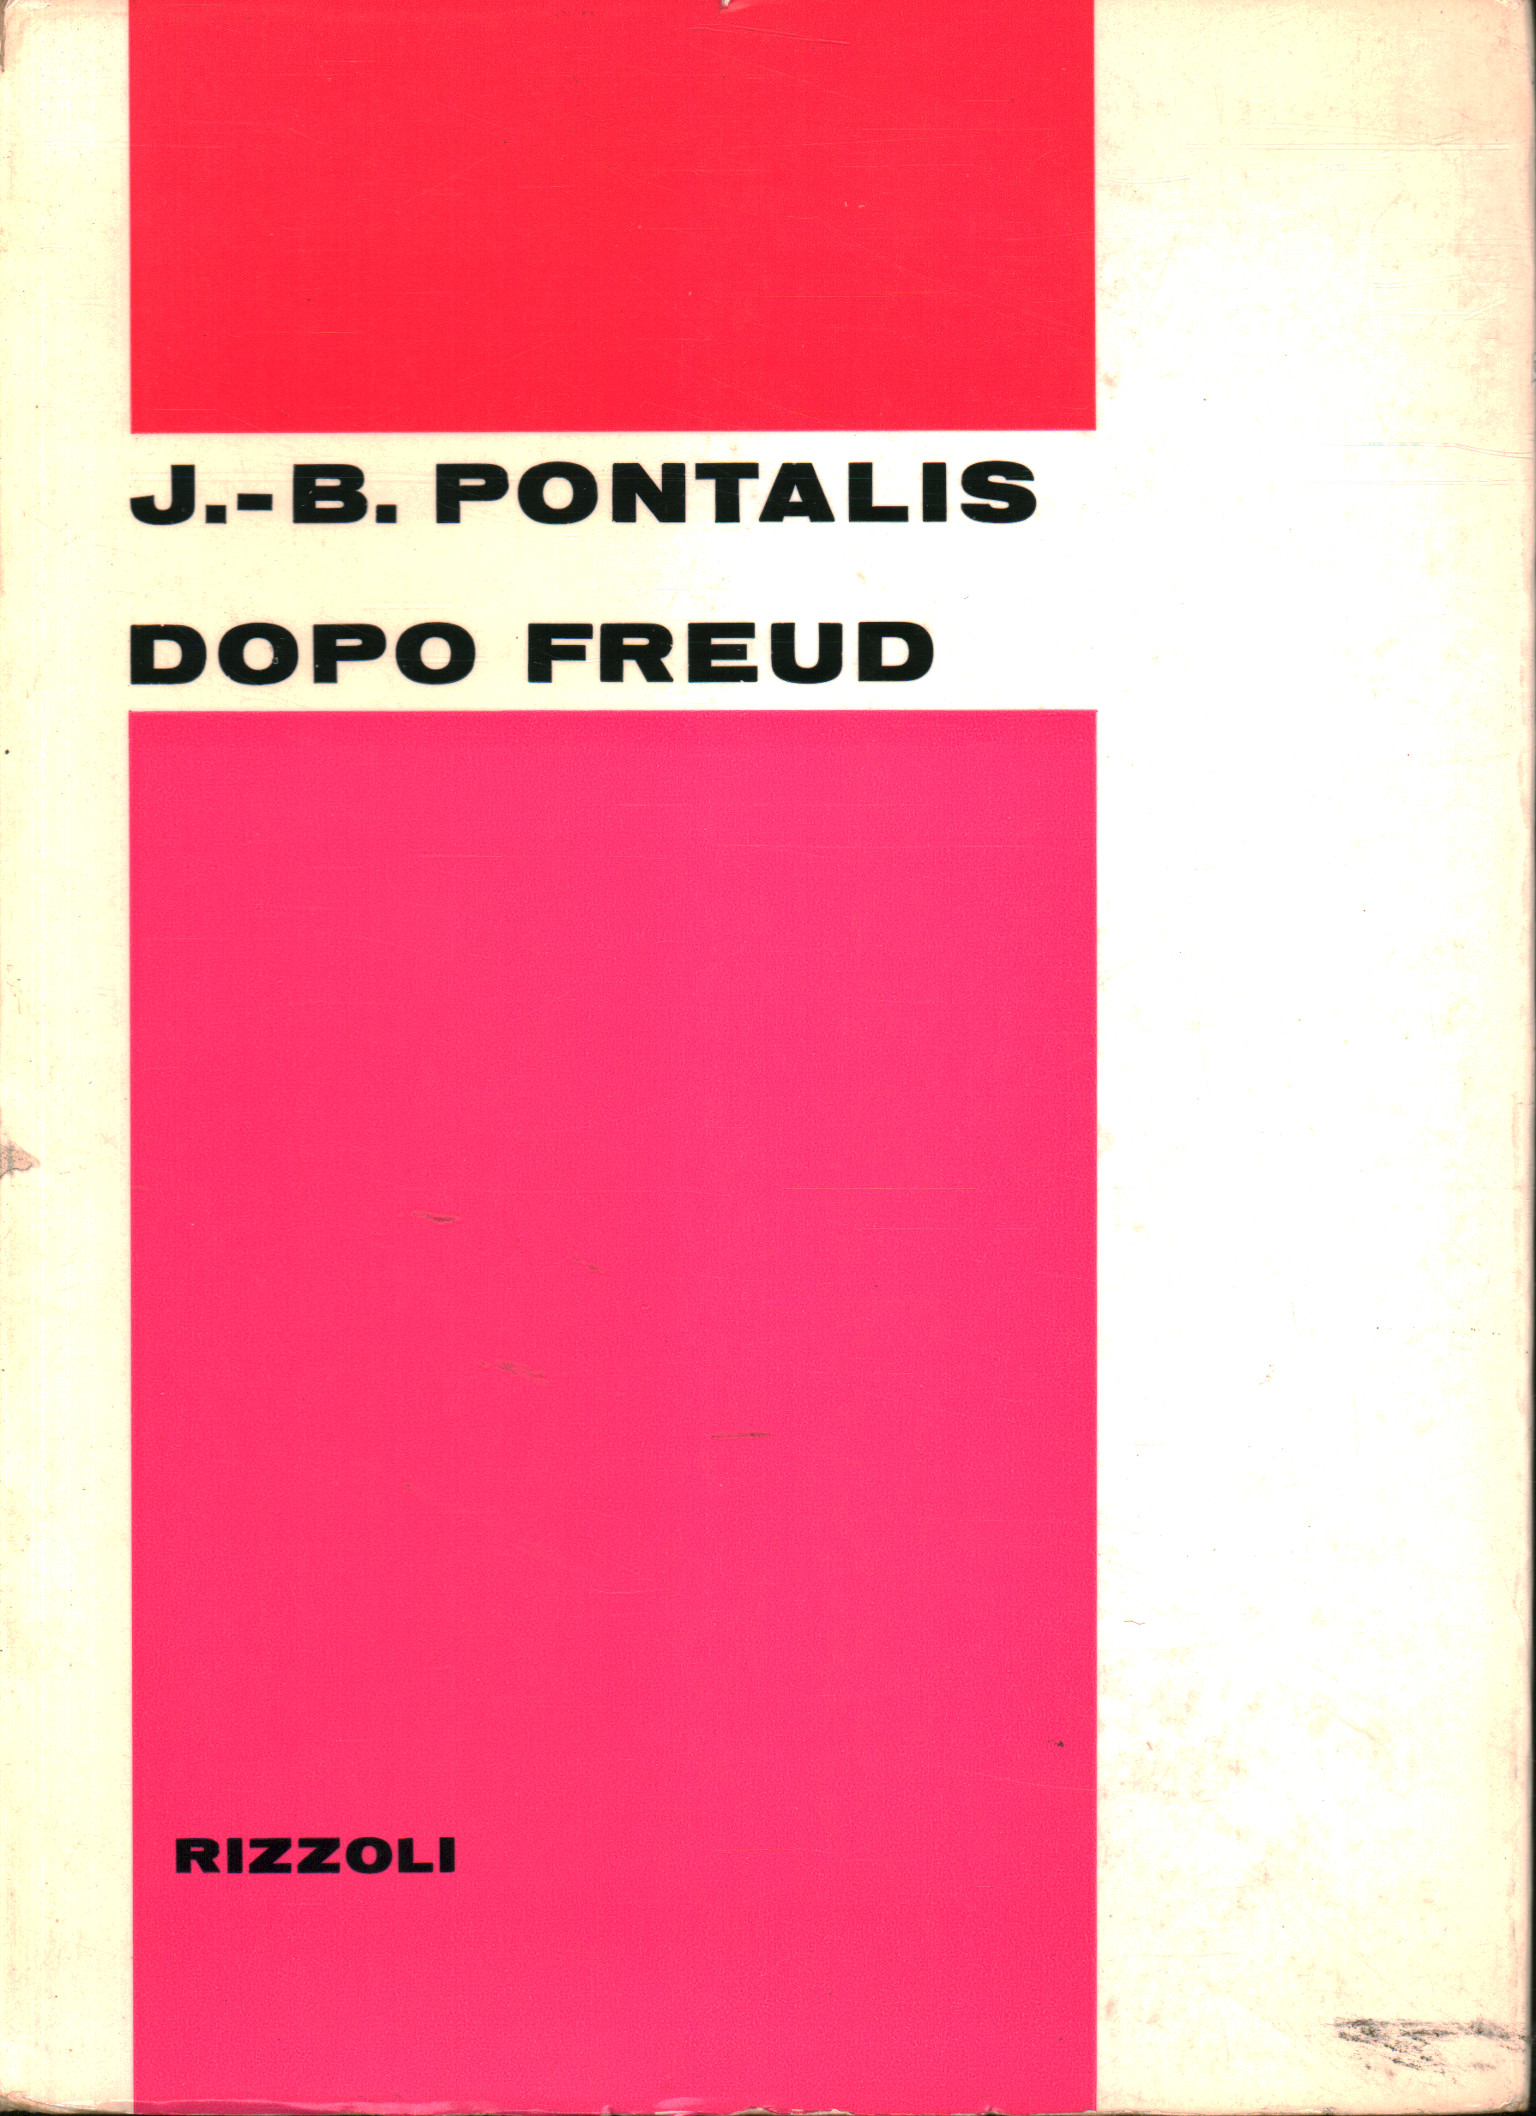 After Freud, J.-B. Pontalis